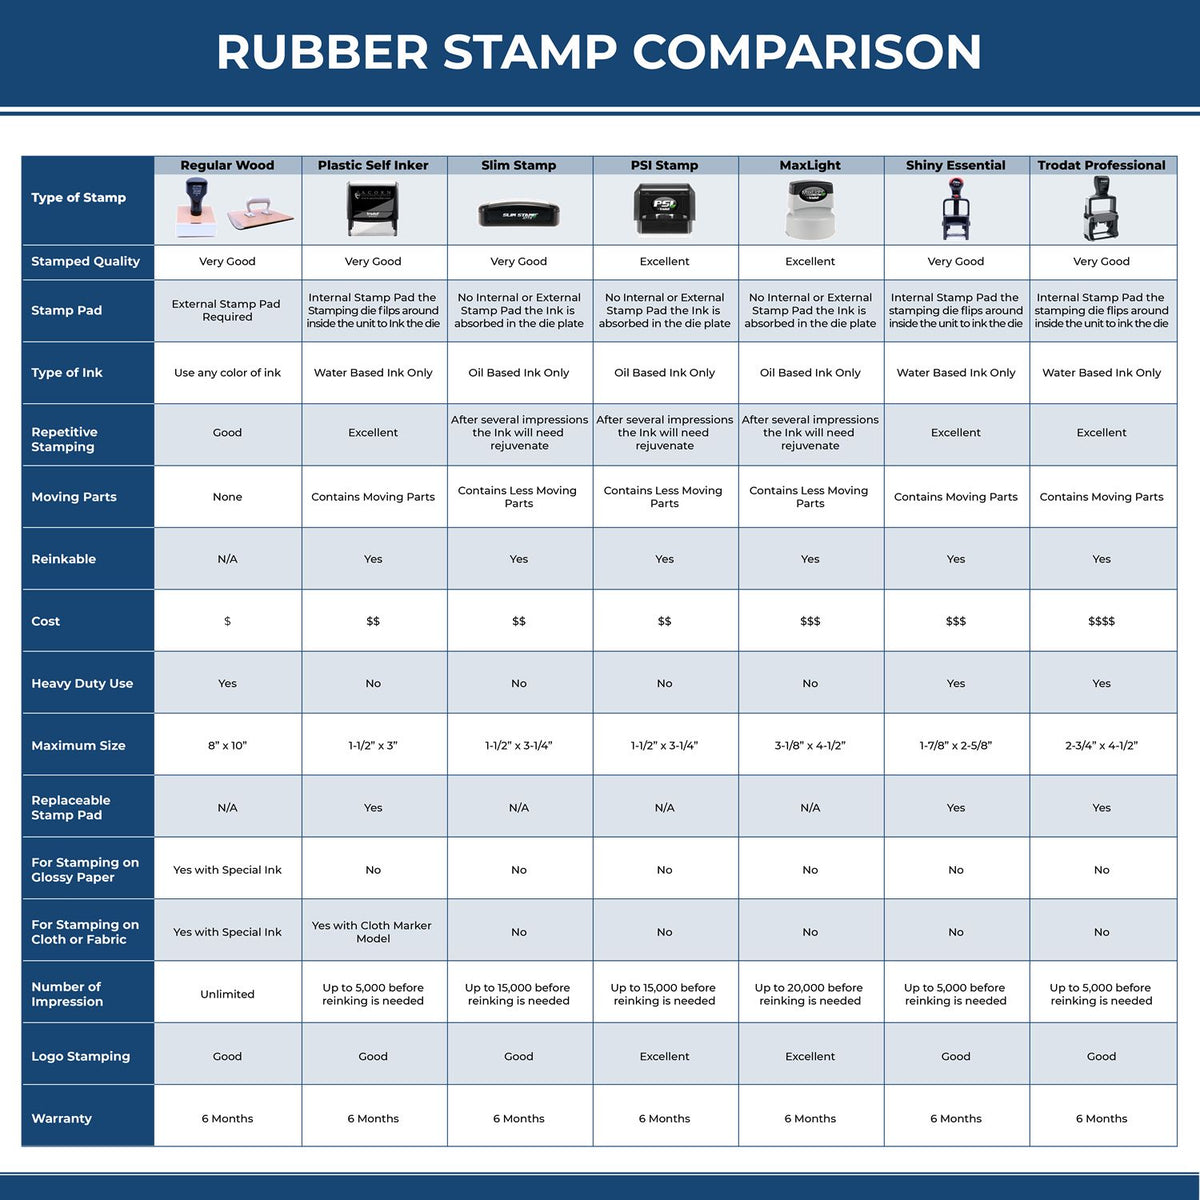 Covid-19 Patient Rubber Stamp 4485R Rubber Stamp Comparison